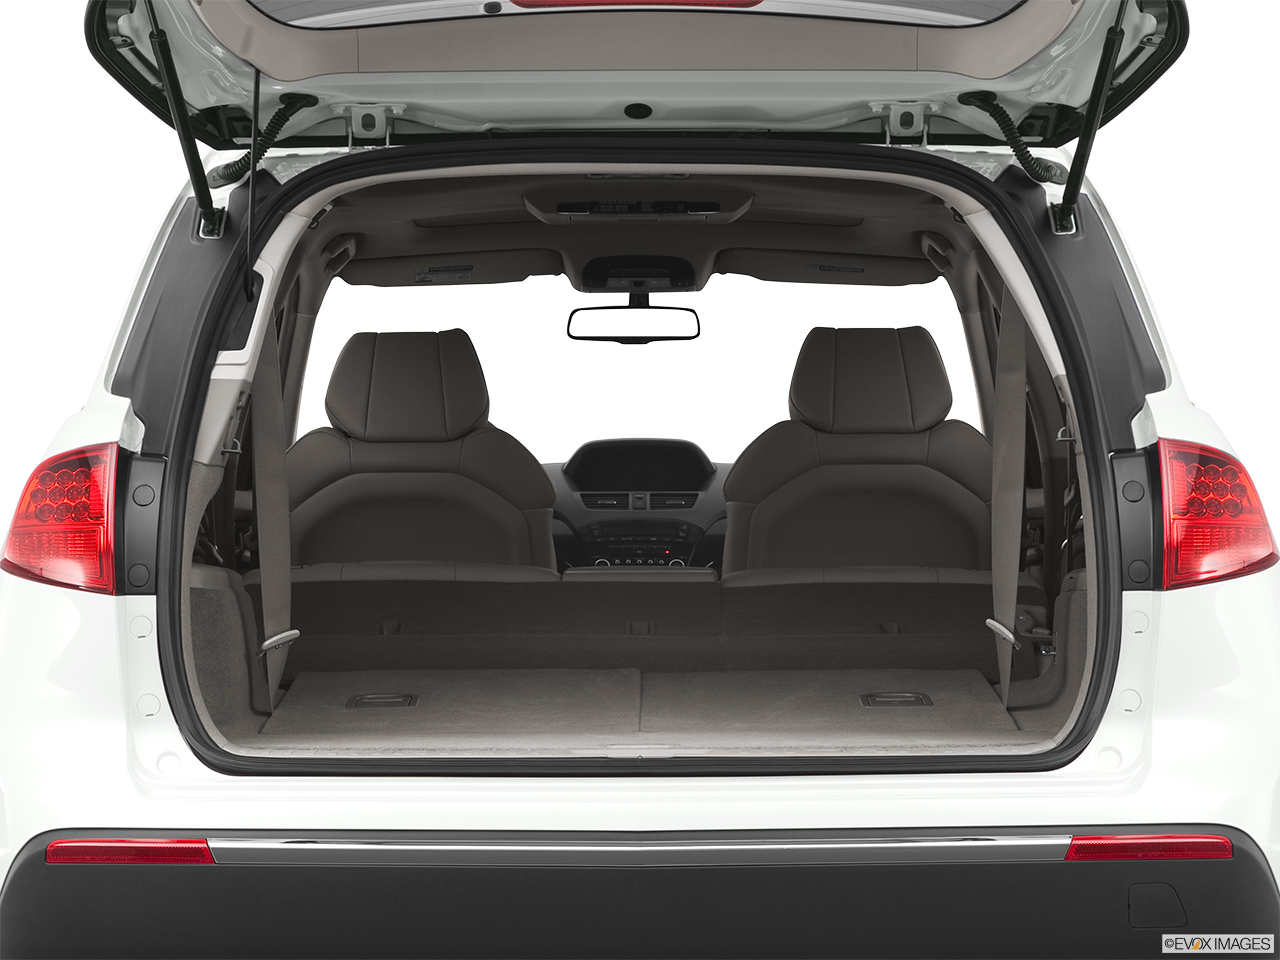 2011 Acura MDX MDX Hatchback & SUV rear angle. 